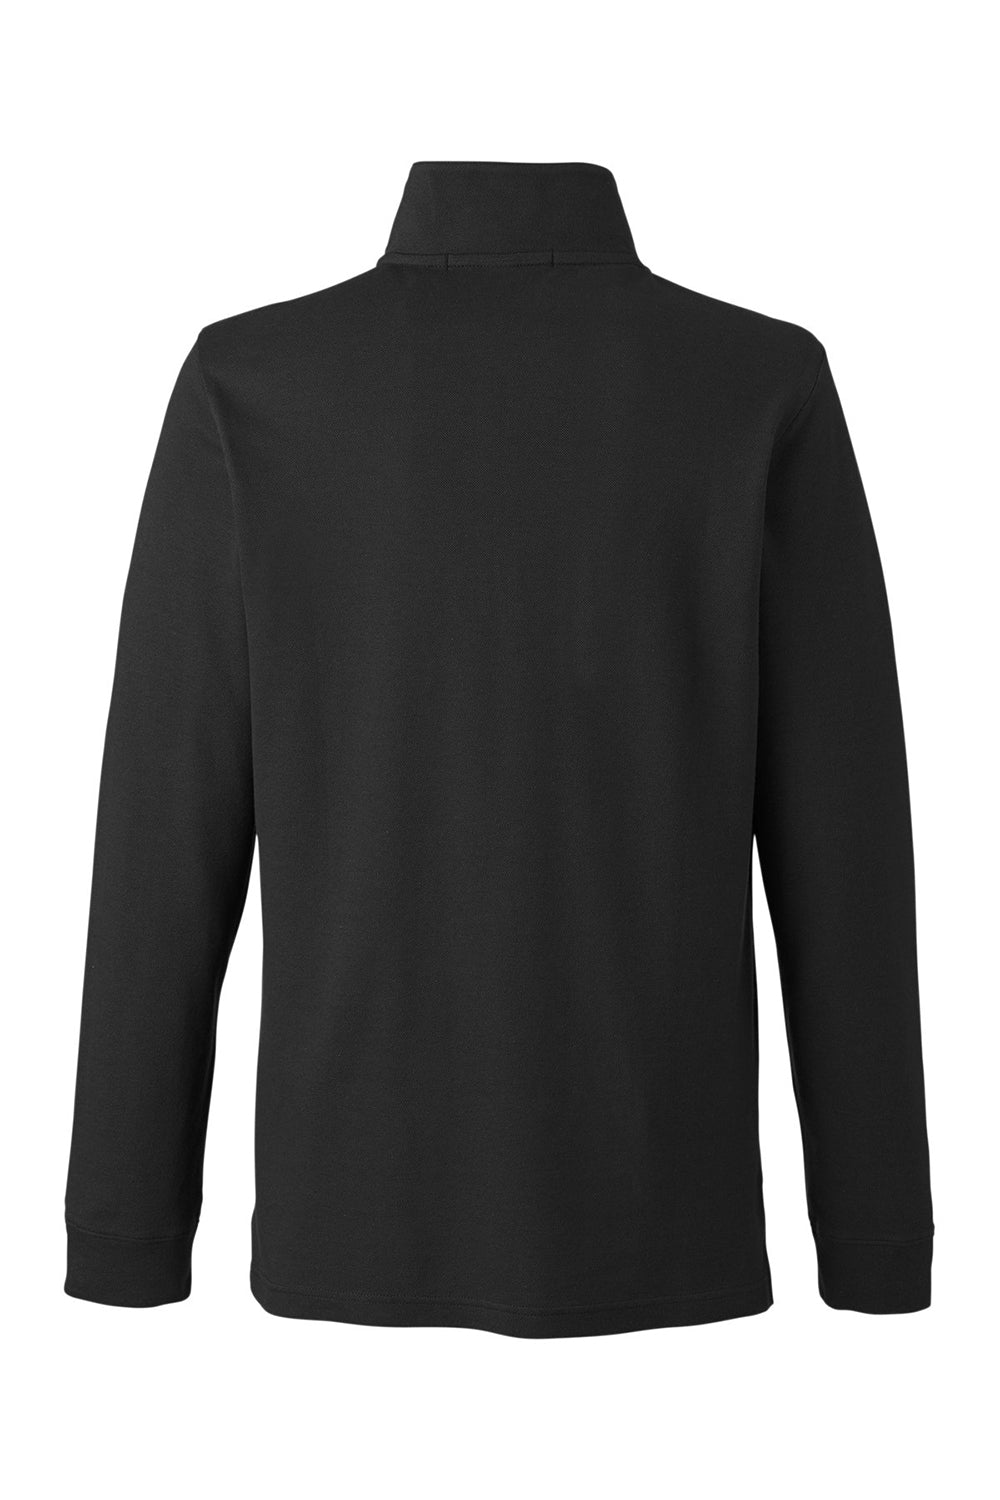 Devon & Jones DG400 Mens New Classics Performance Moisture Wicking 1/4 Zip Sweatshirt Black Flat Back